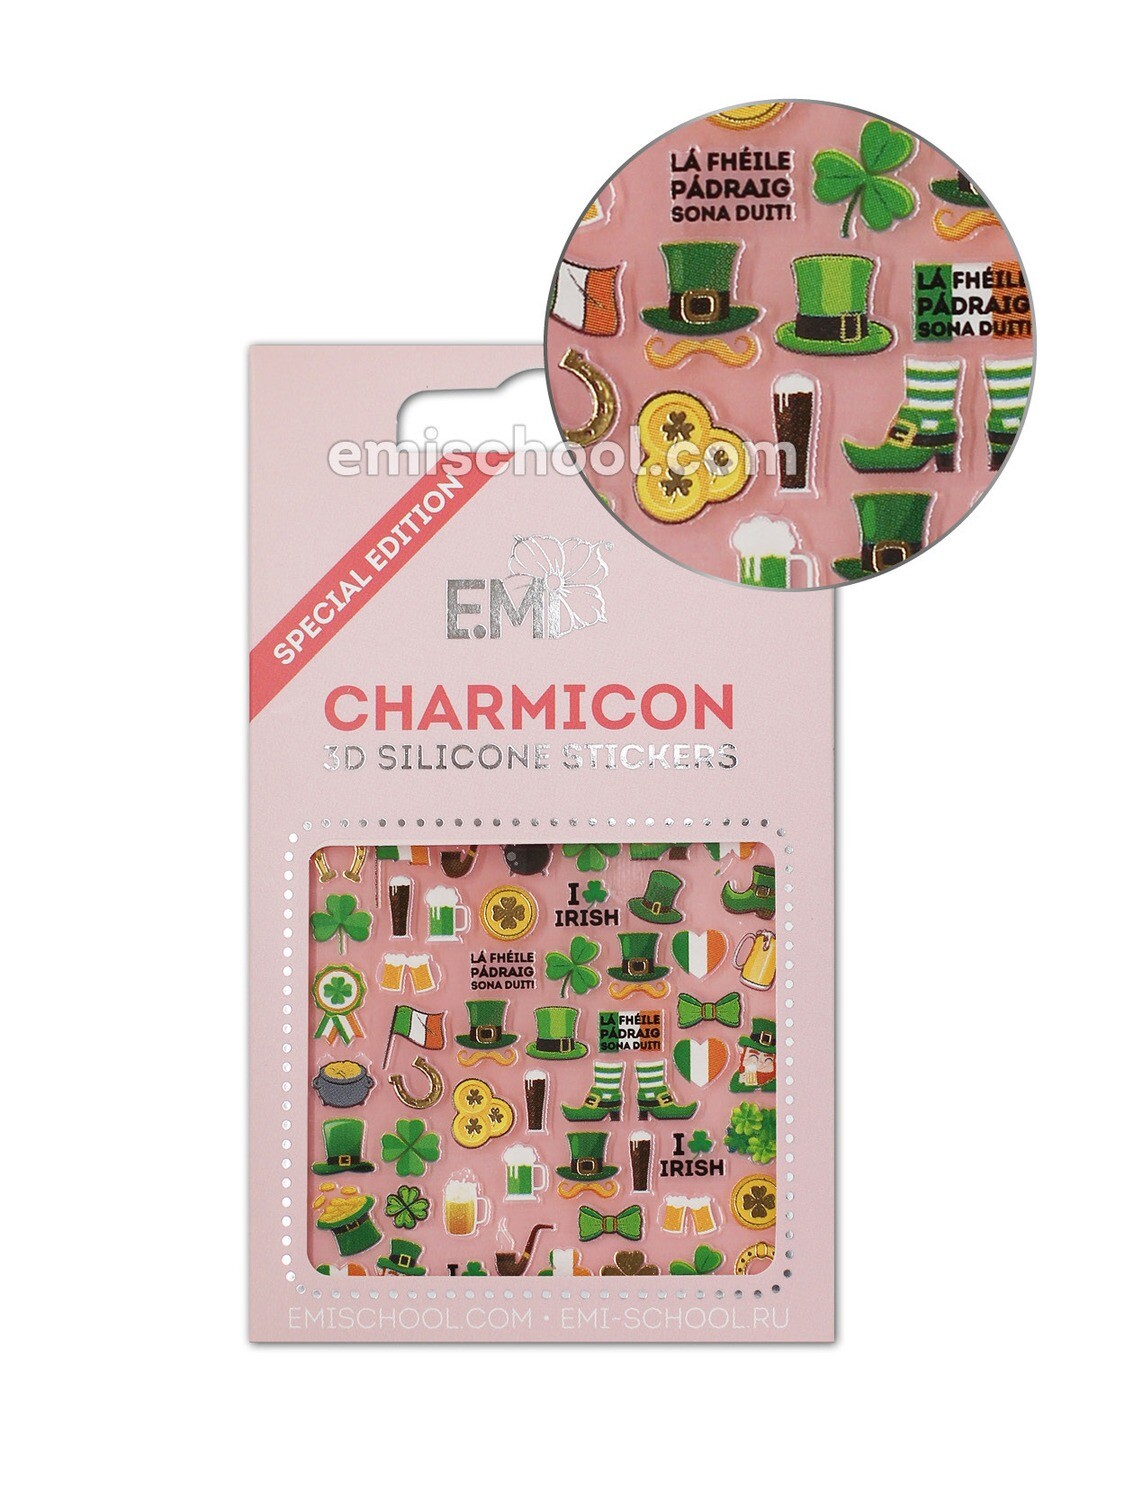 Charmicon 3D Silicone Stickers Ireland